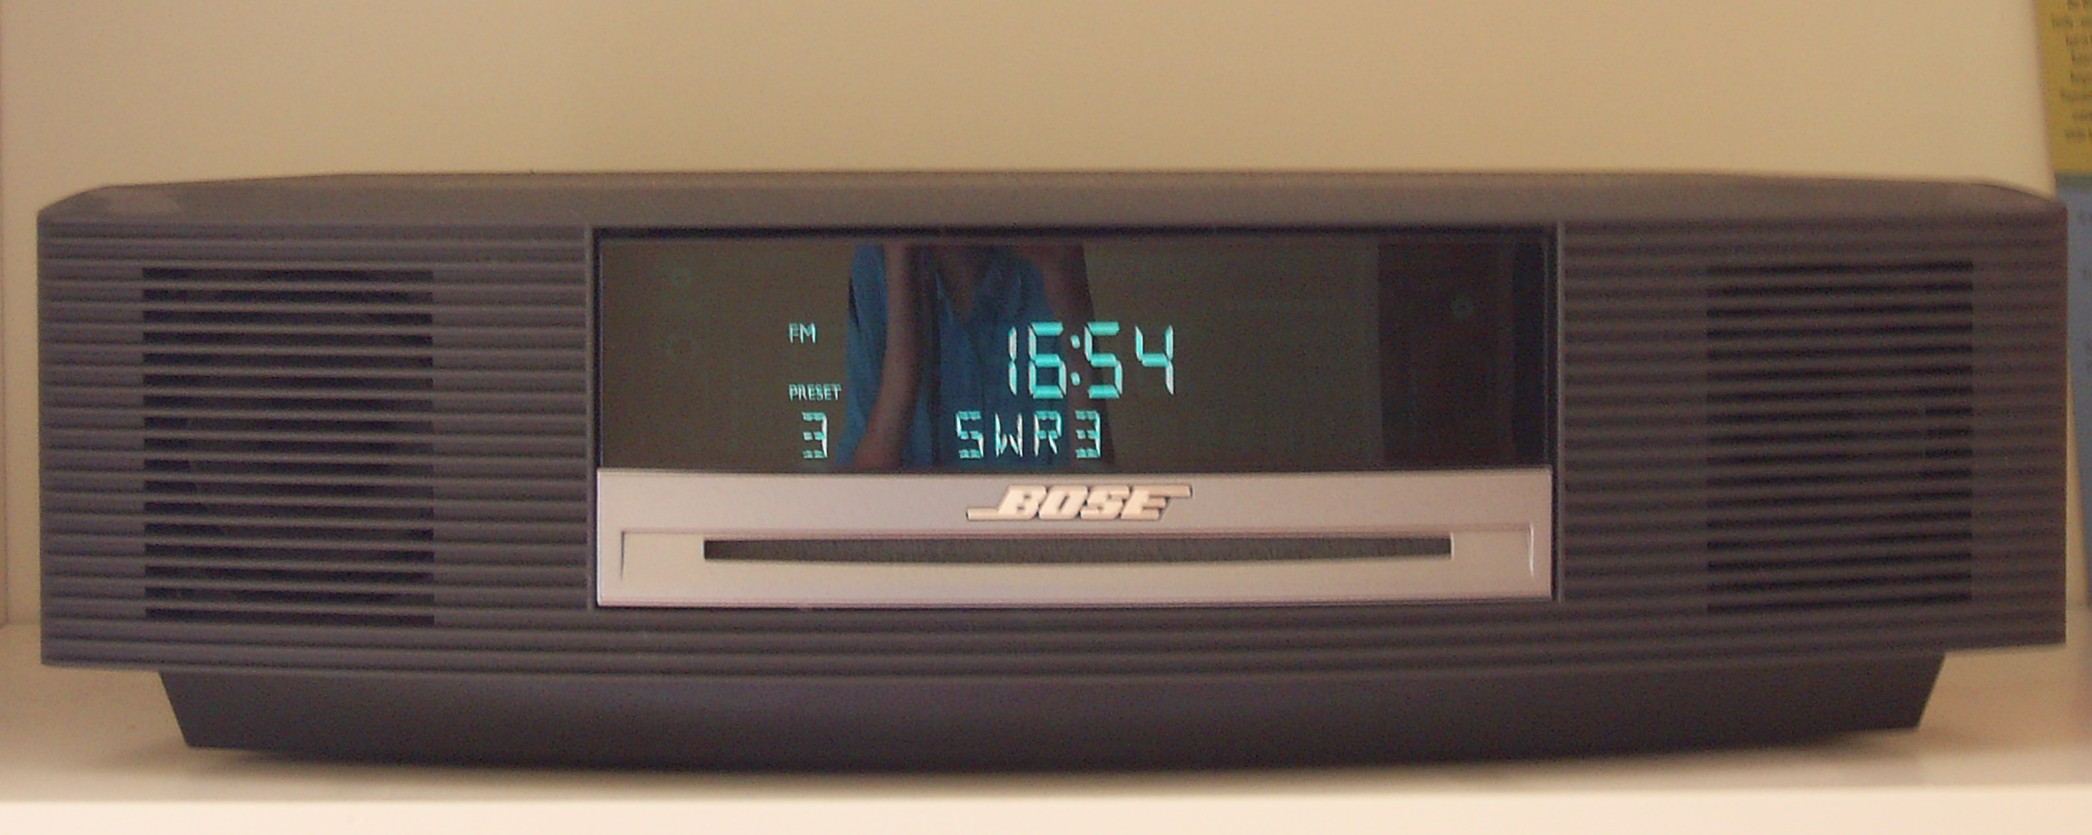 Bose Bose Modell Akustisch Welle Musik System II CD Komponenten 